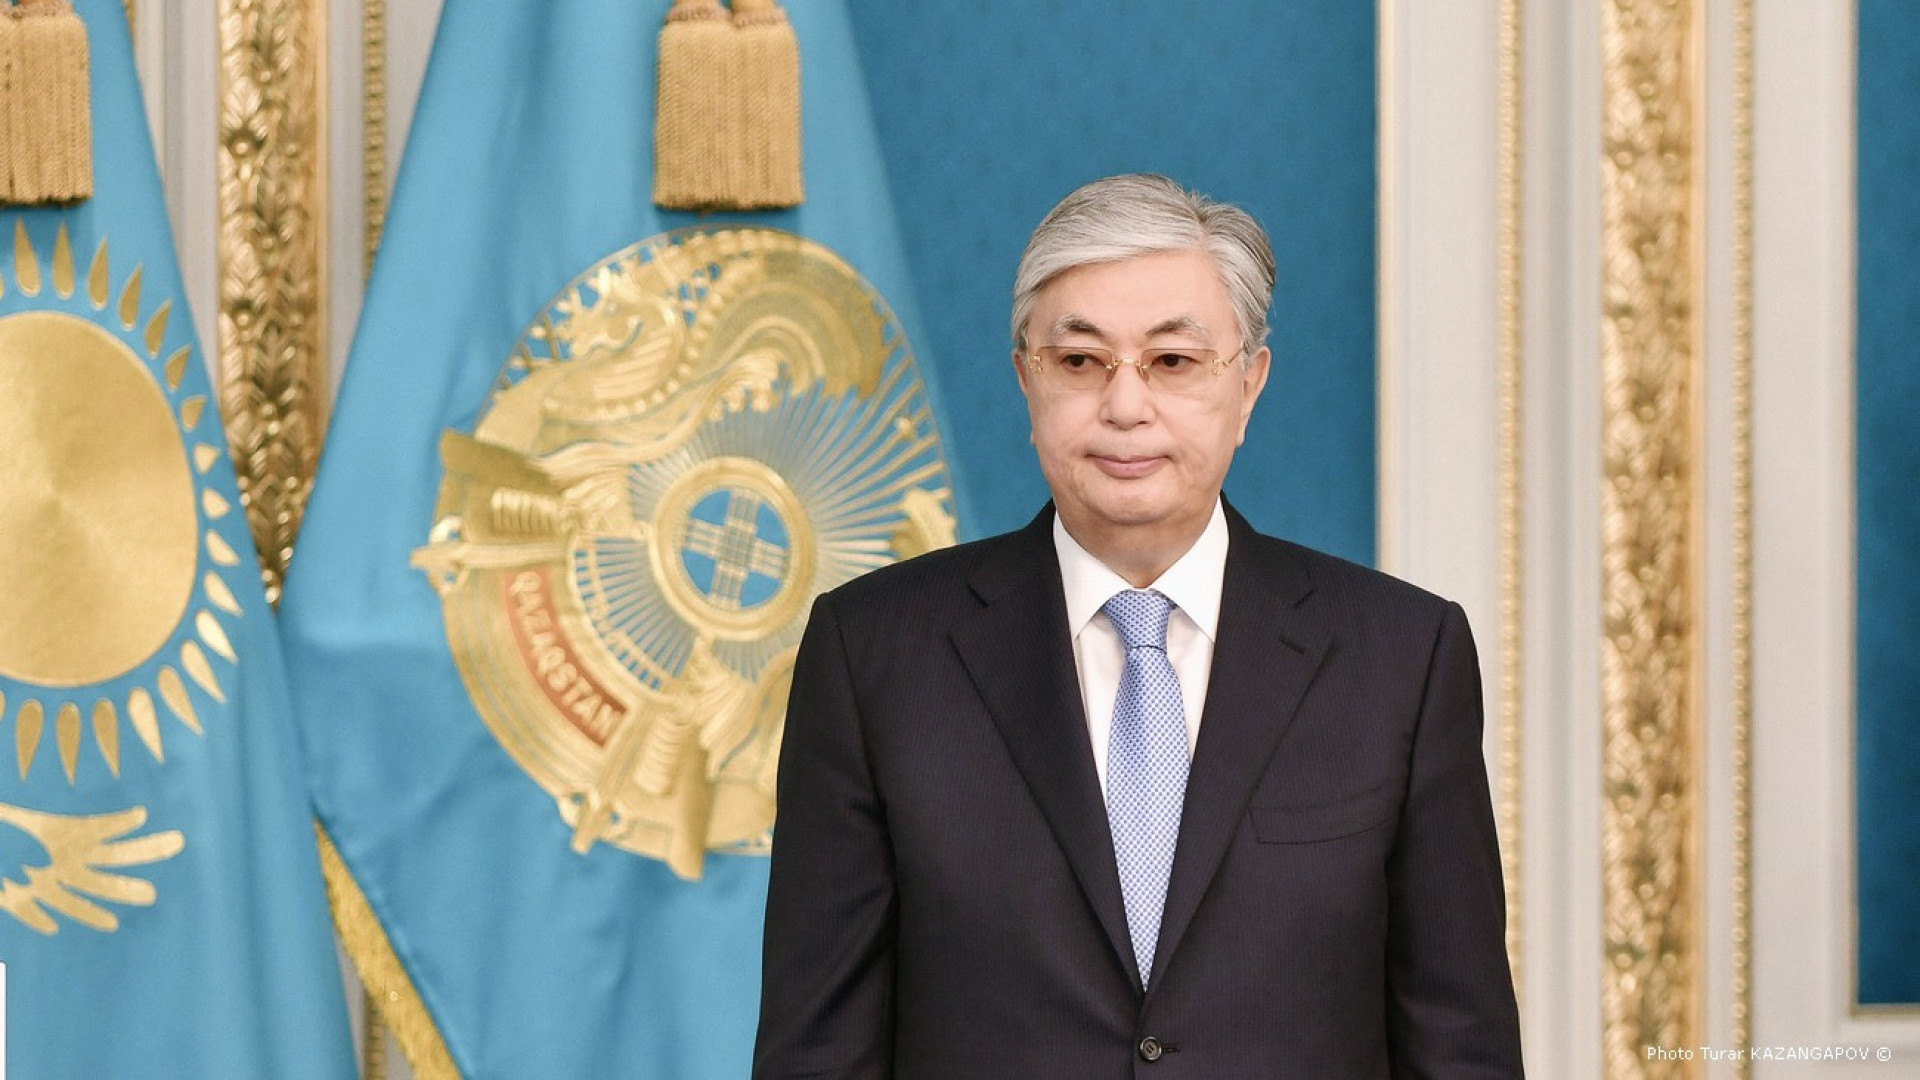 16-17 августа президент Казахстана Касым-Жомарт Токаев посетит Республику Корея